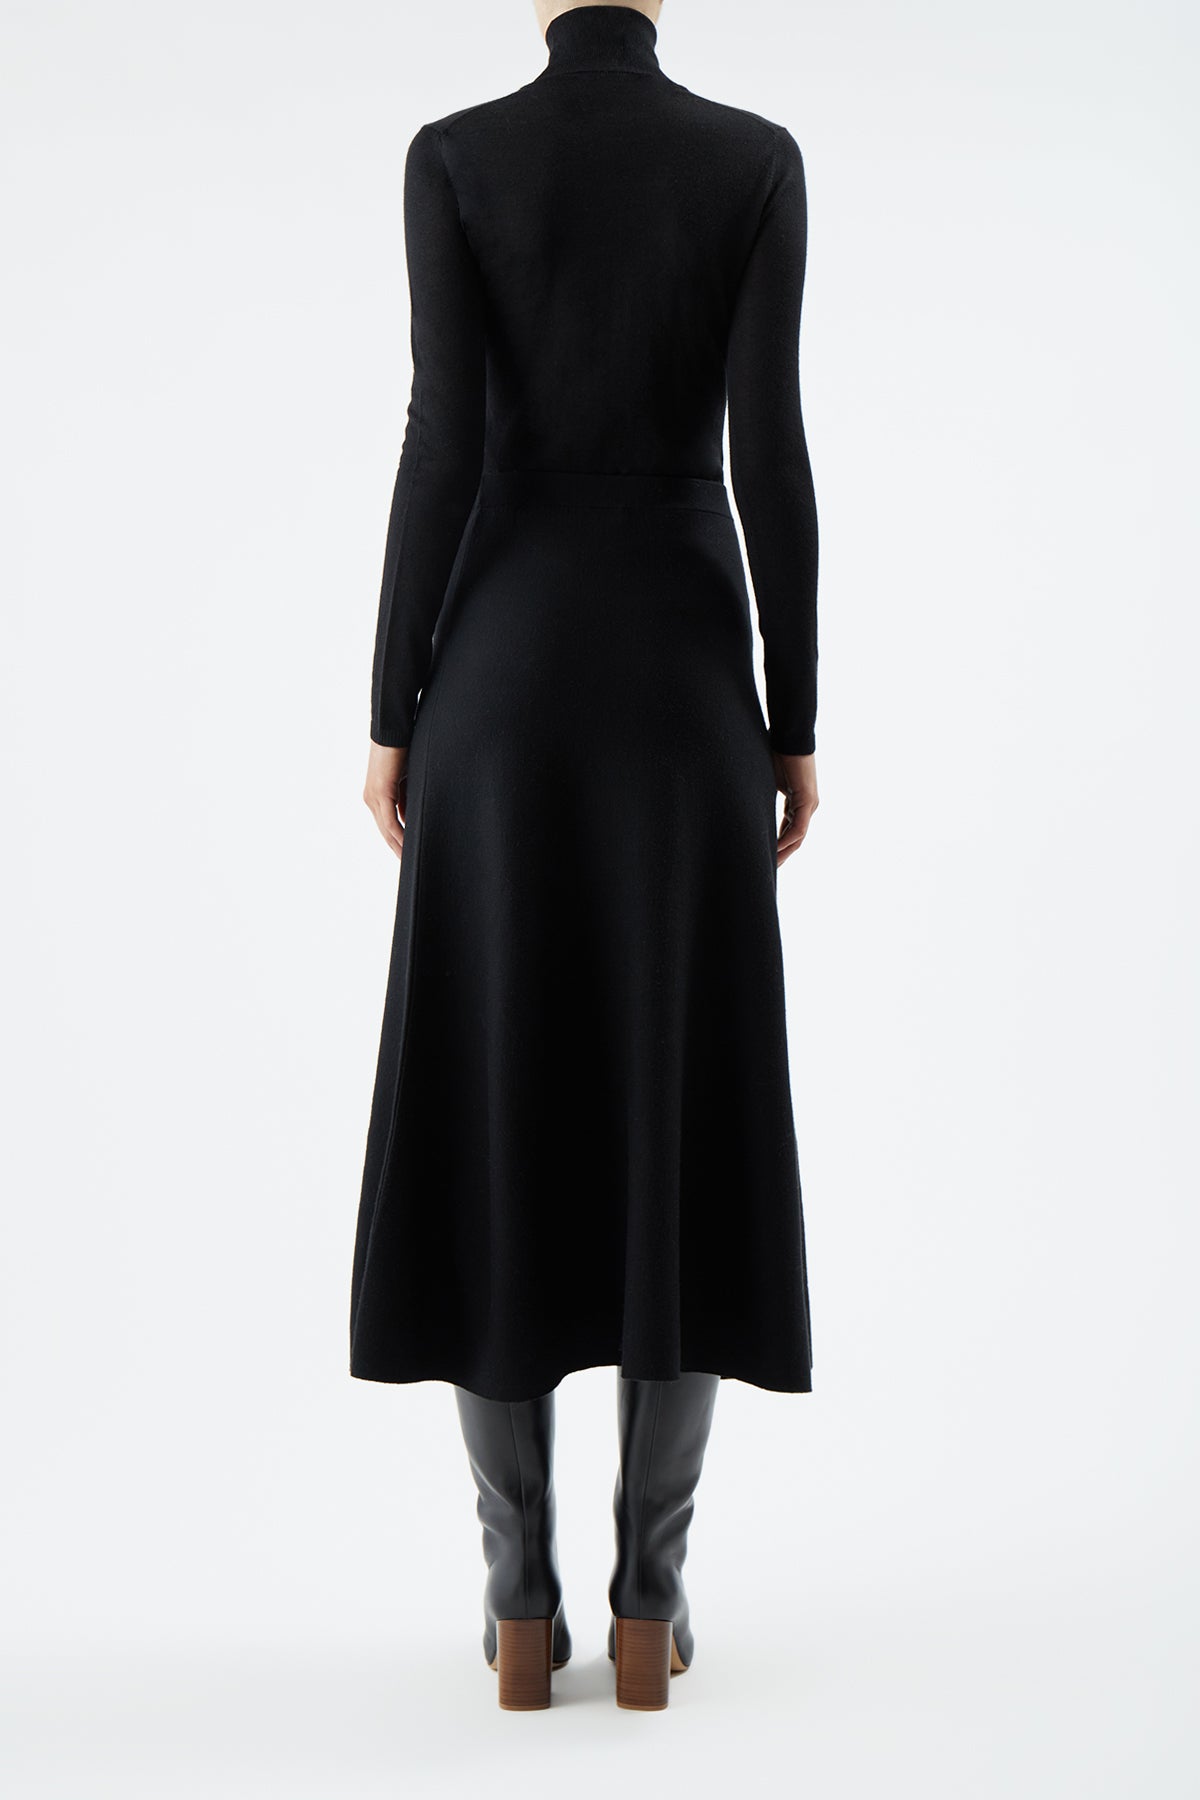 Freddie Knit Skirt in Black Cashmere Wool